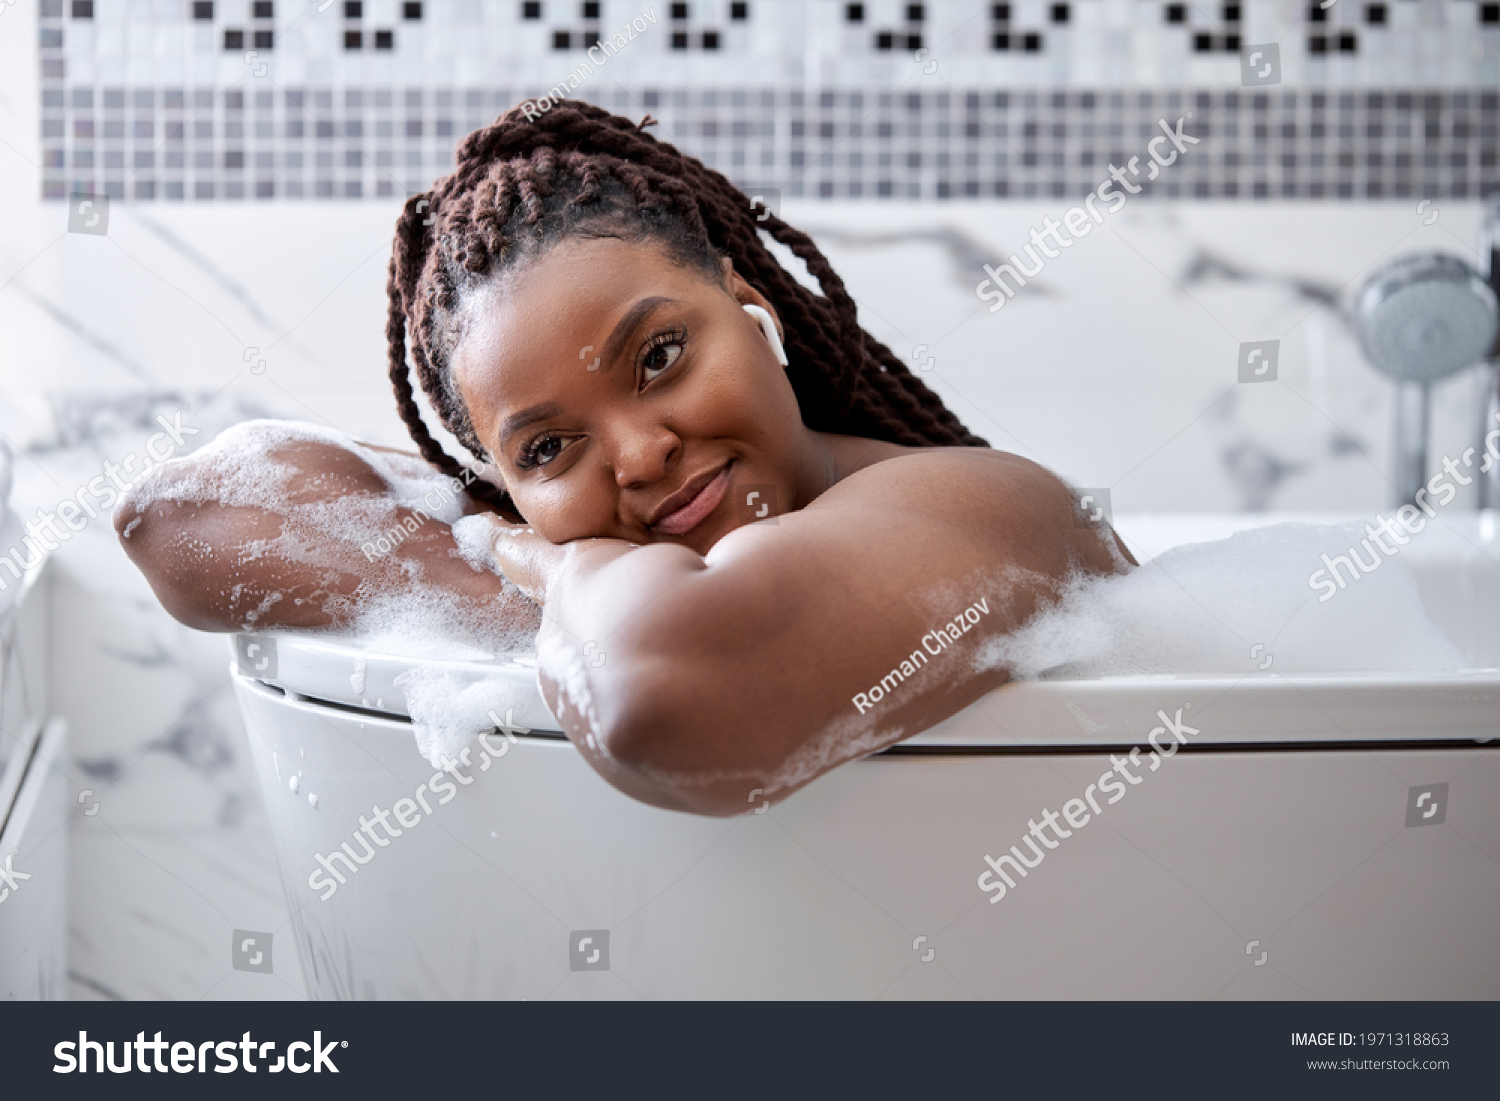 「african Woman Bathing」の画像、写真素材、ベクター画像 Shutterstock